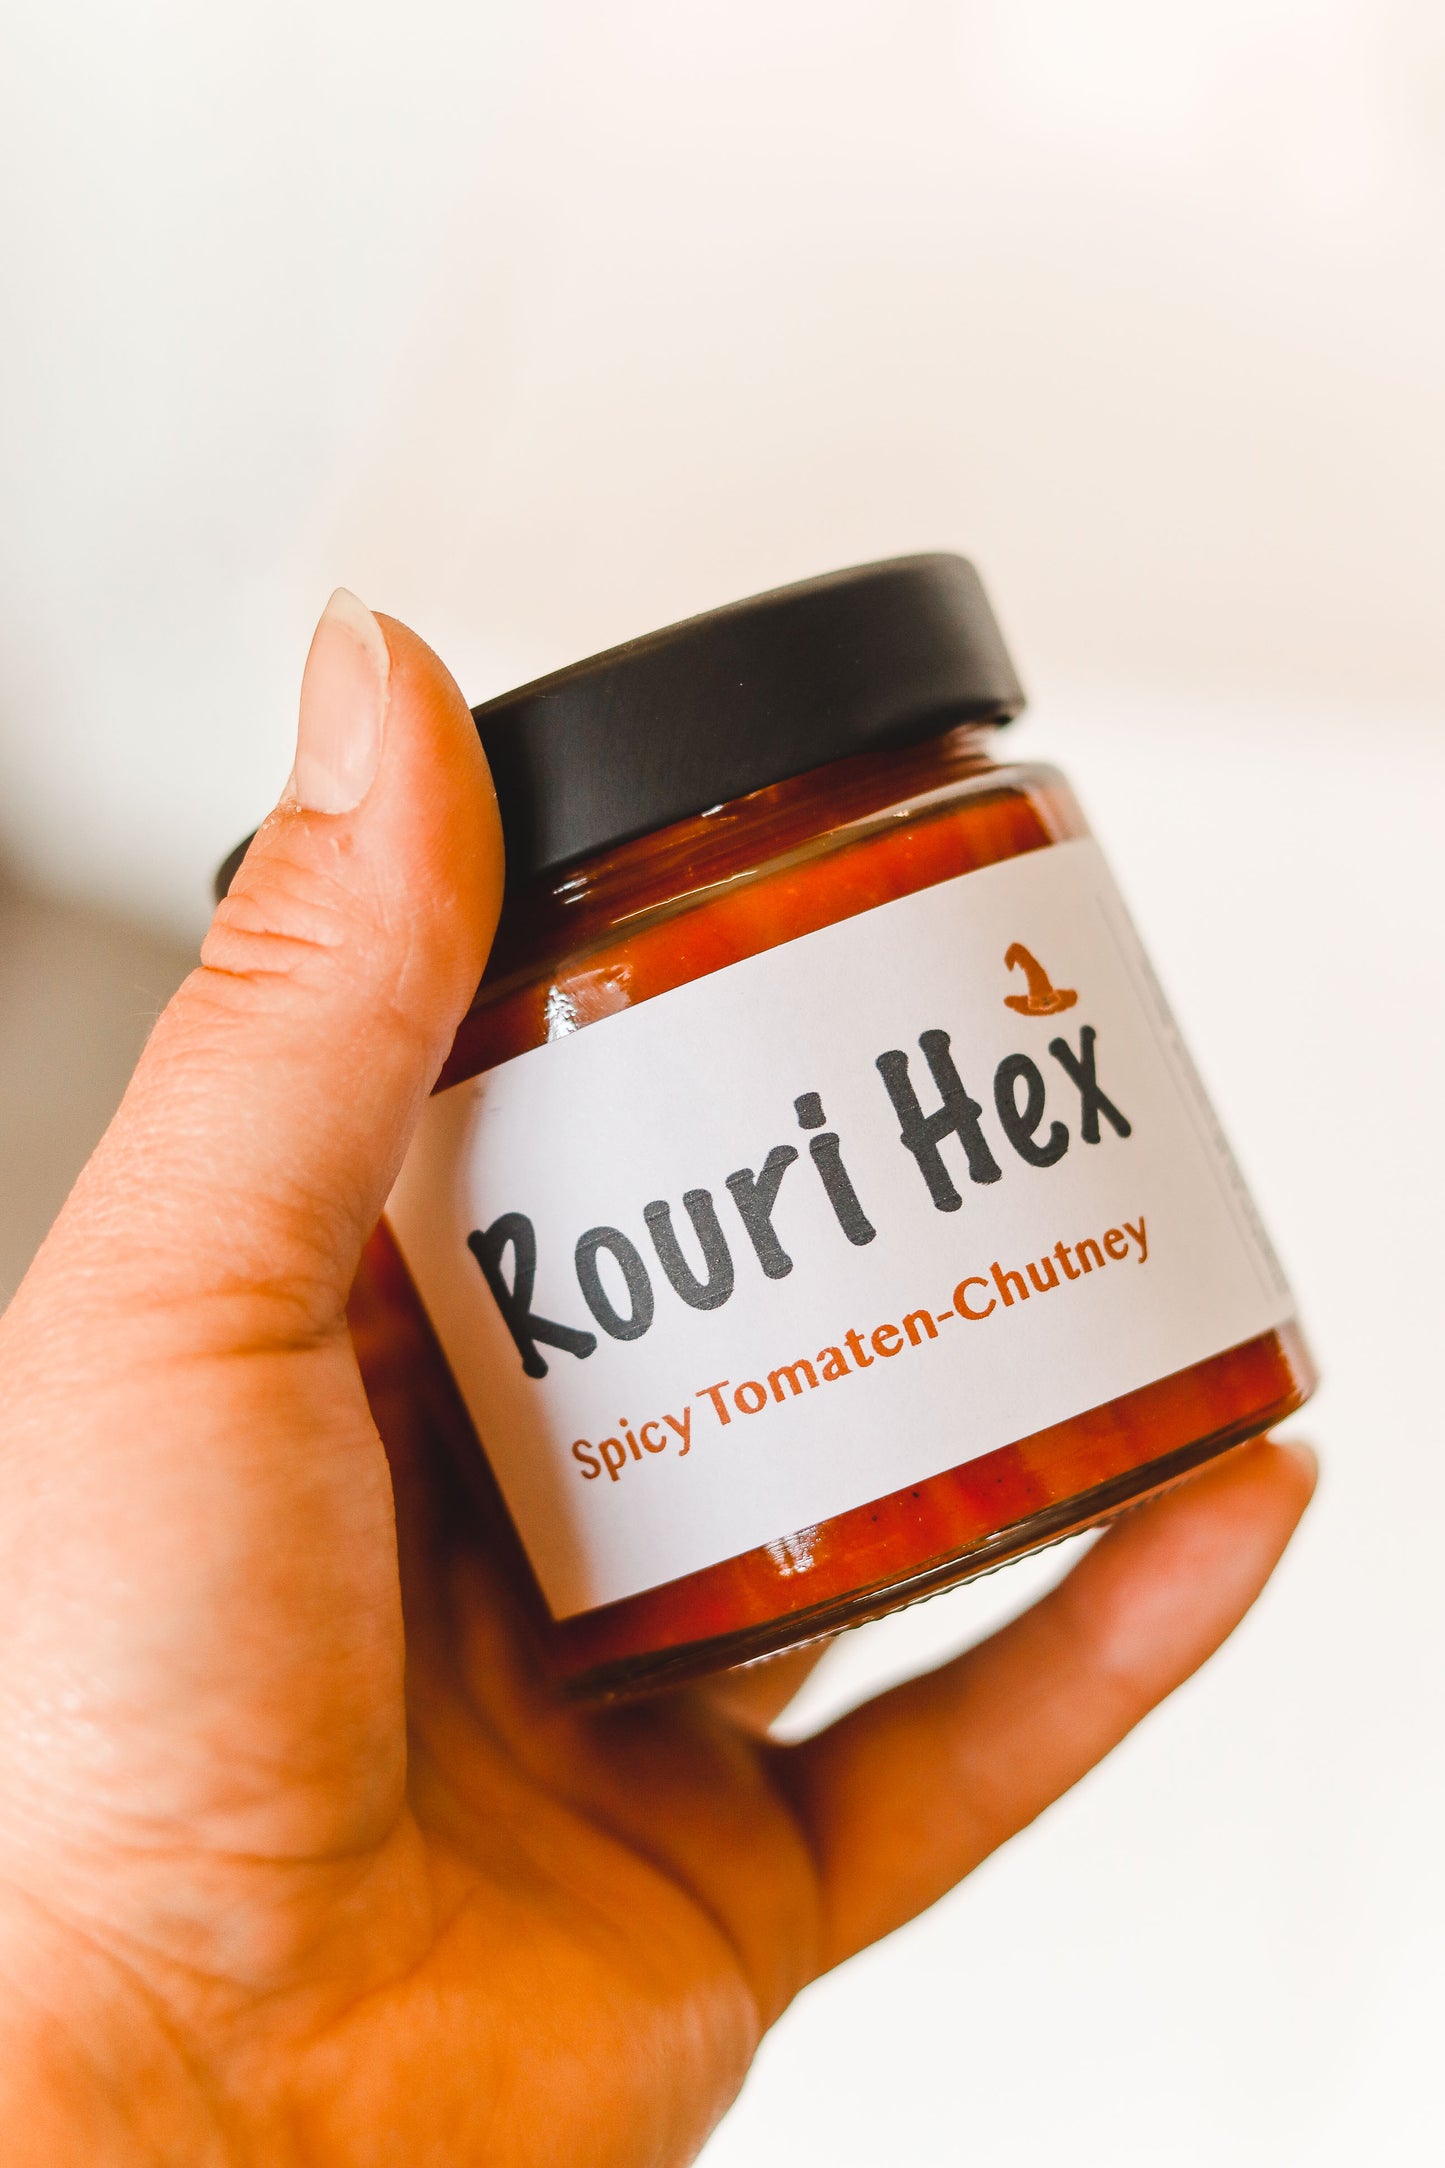 Rouri Hex – Spicy Tomaten-Chutney